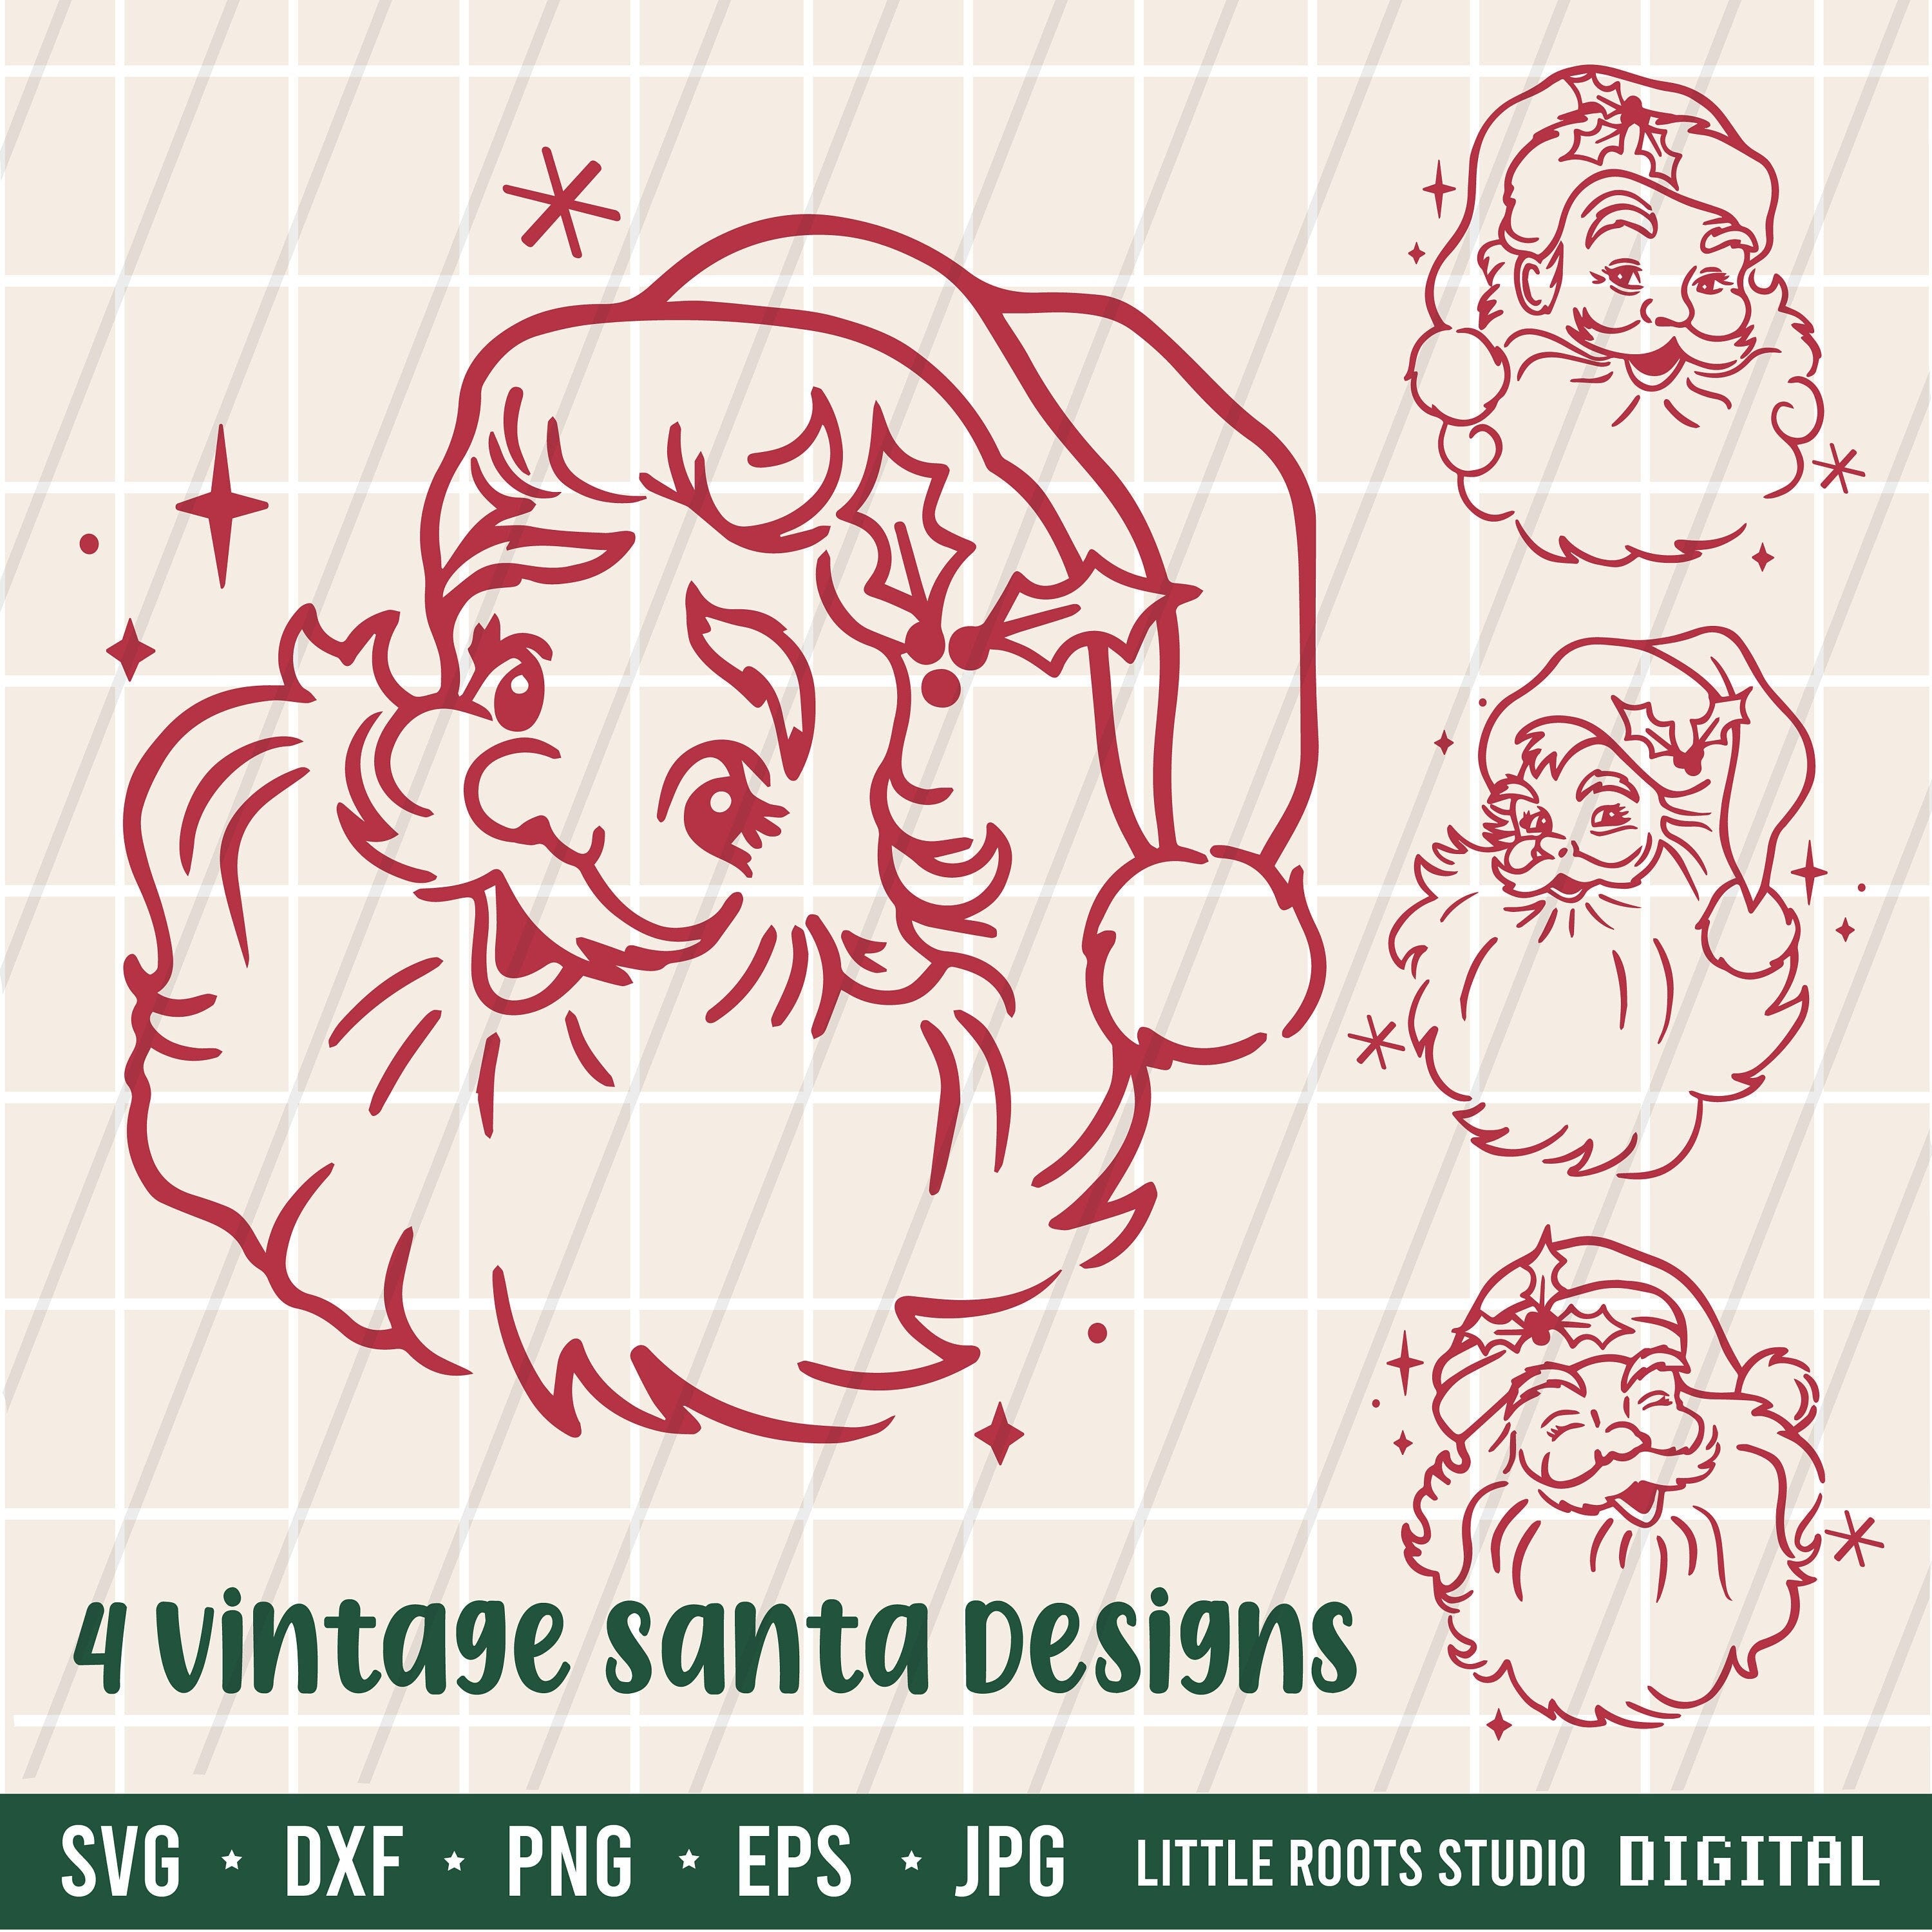 Santa Claus SVG / Santa SVG / Christmas DIY / Christmas svg / Vintage Santa / Father Christmas / Santa Face Svg / Santa dxf / Holiday svg